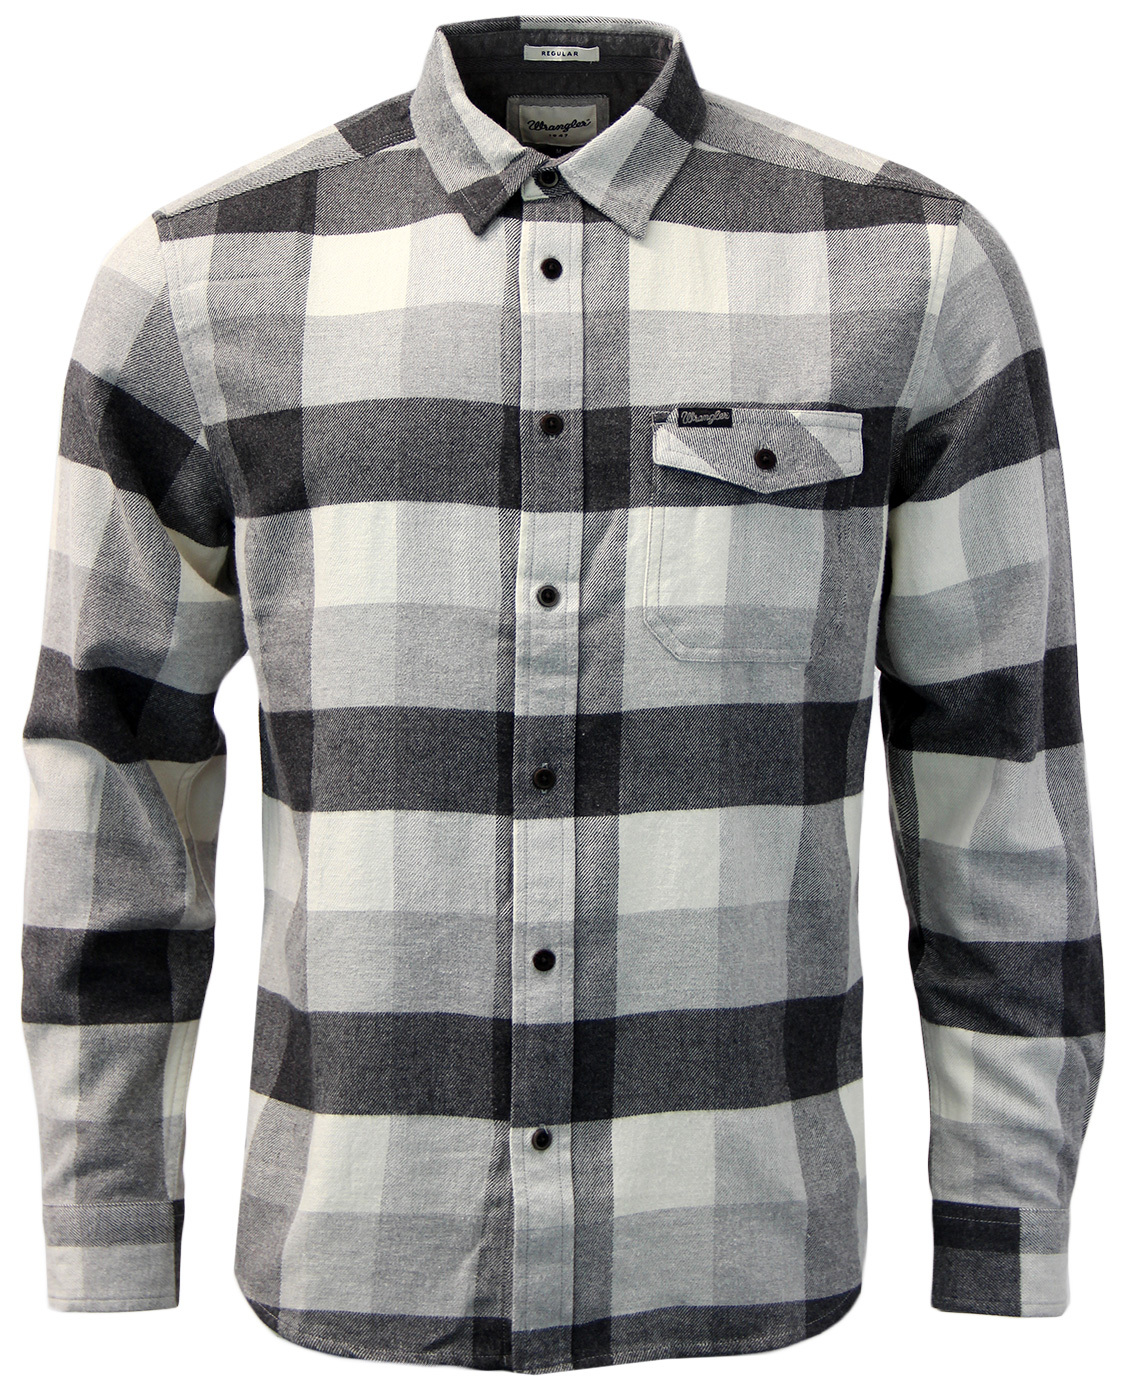 WRANGLER Seasonal Indie Retro Flannel Check Shirt